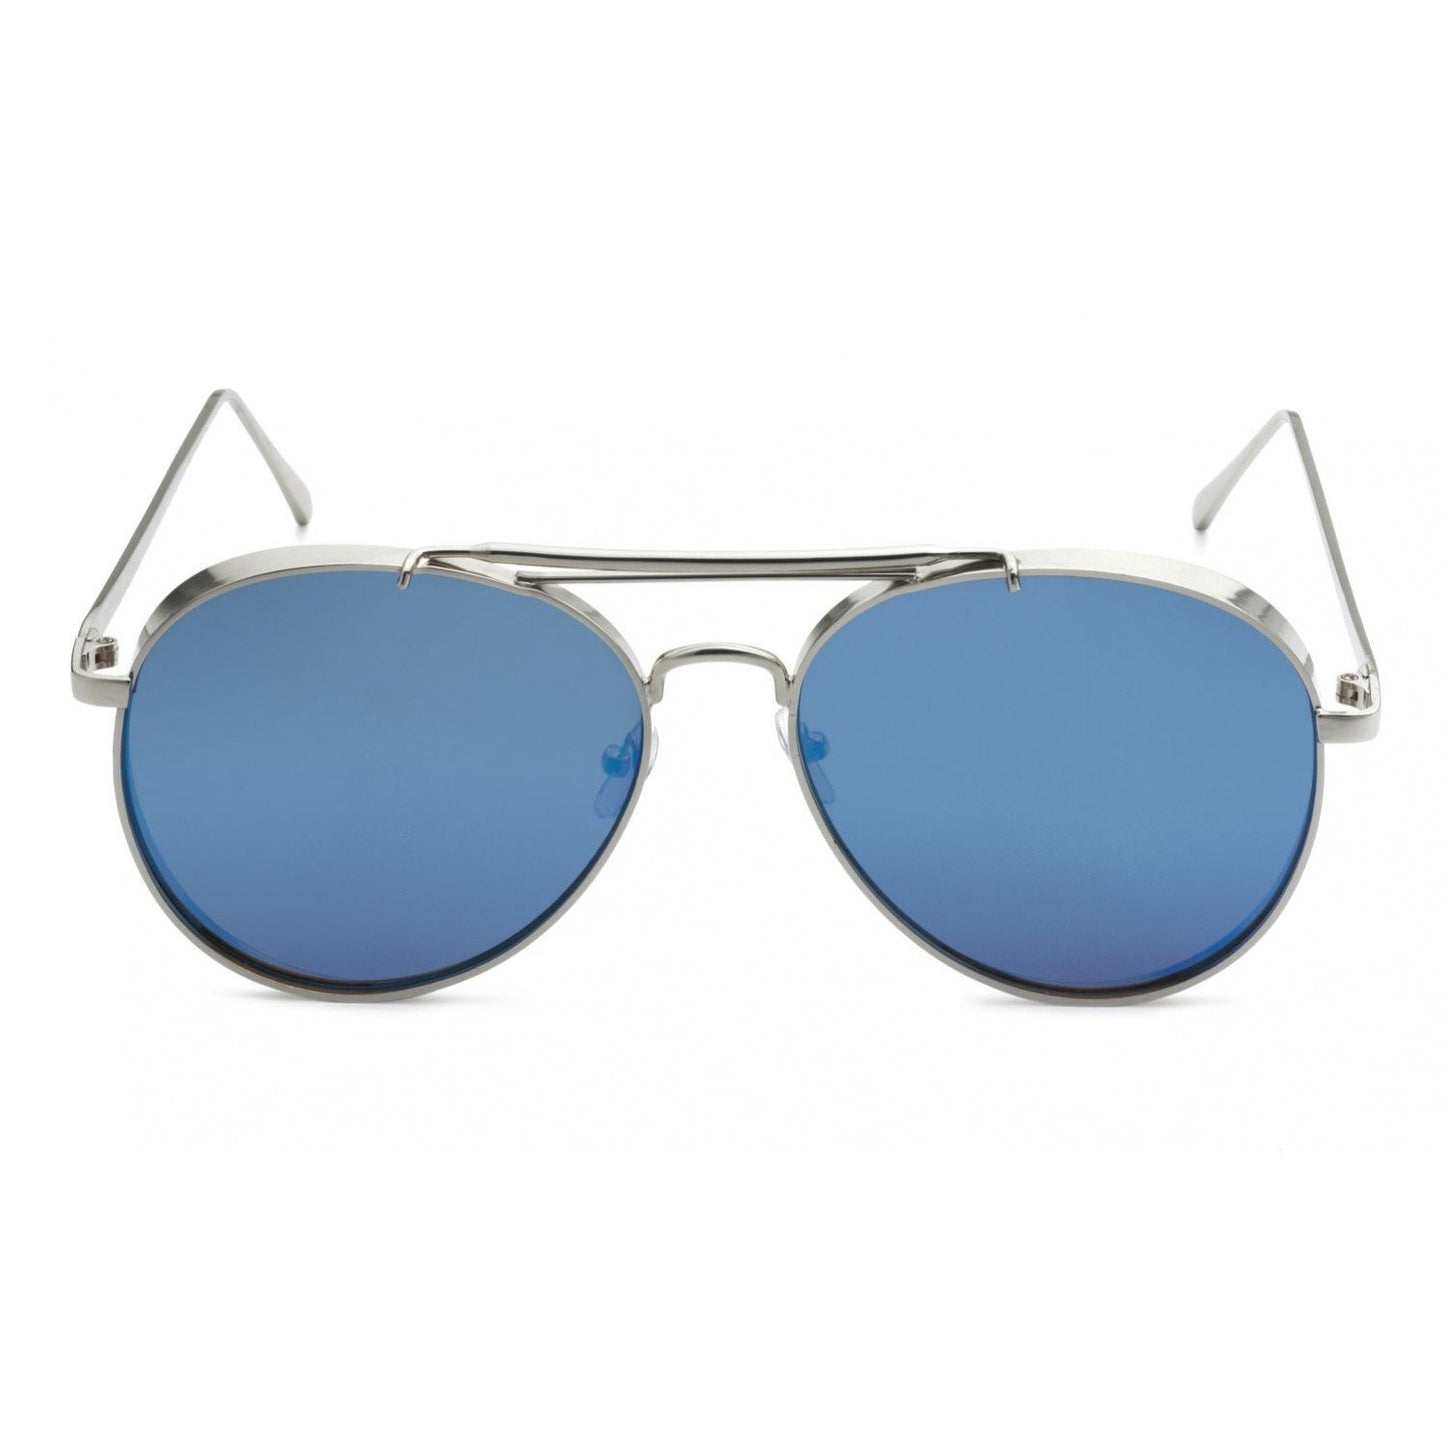 "City Life" Vintage Sunglasses - Weekend Shade Sunglasses